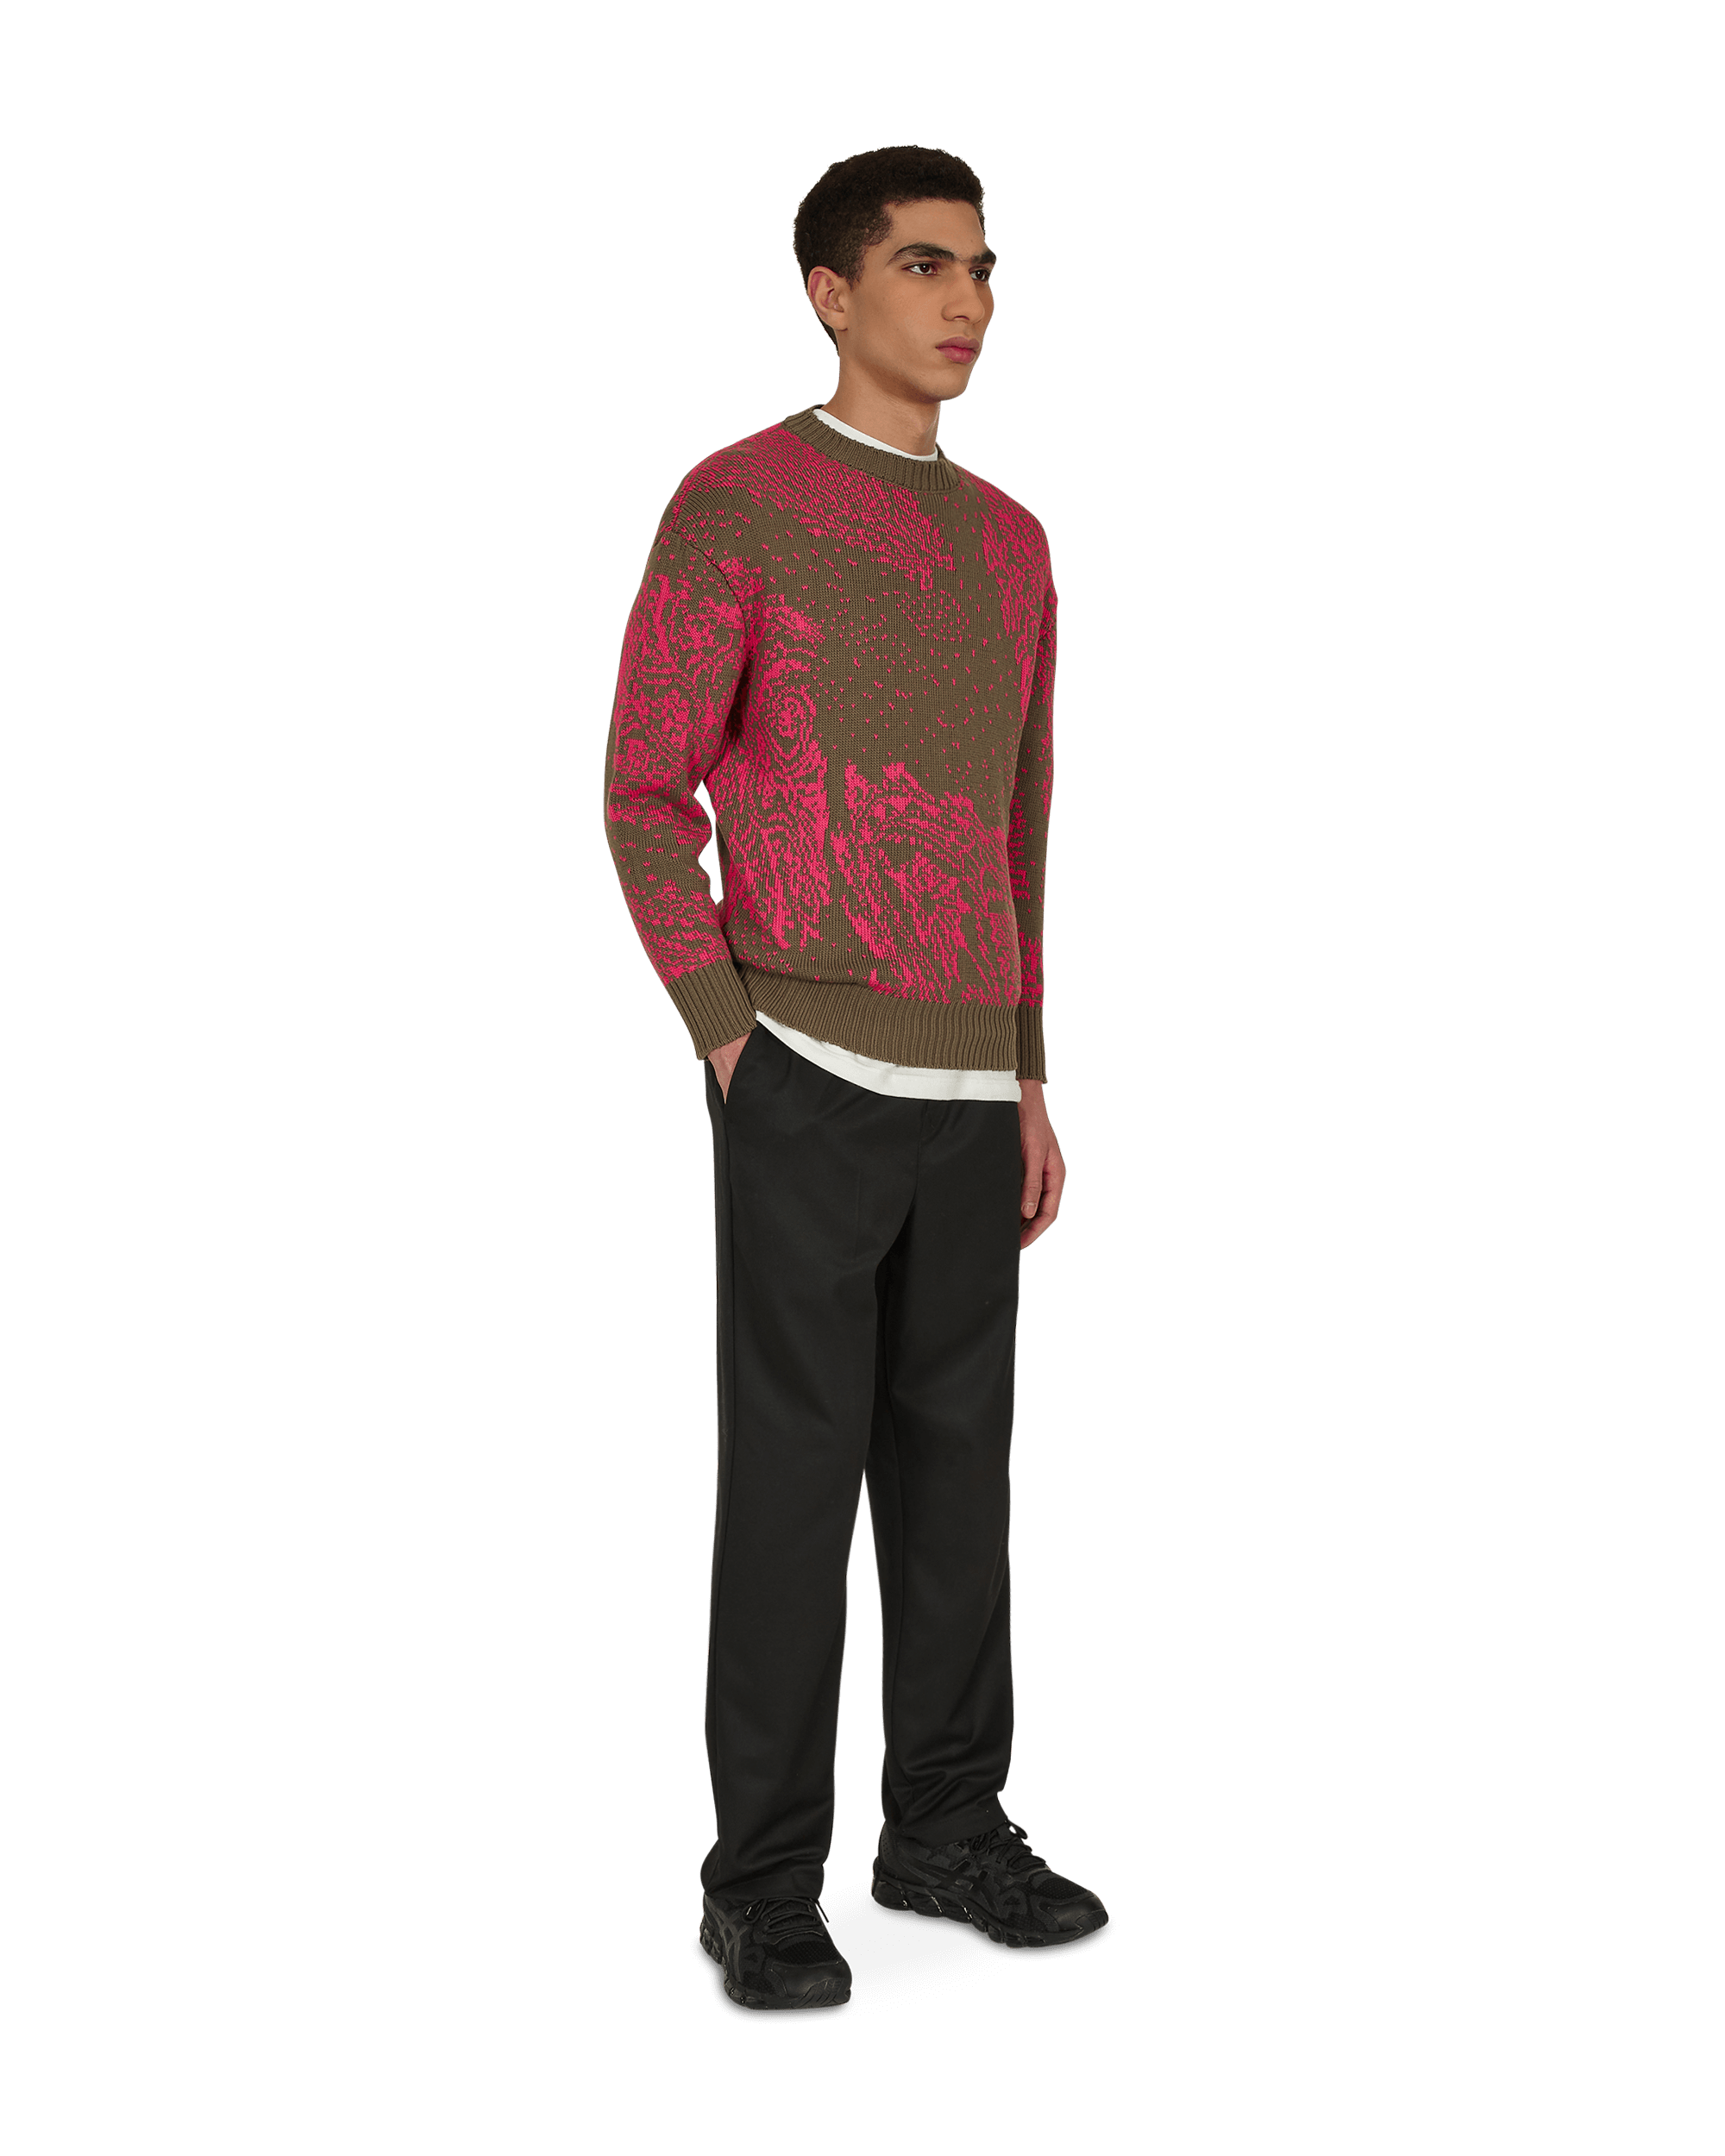 Paria Farzaneh Chocolate Multi Knitwears Sweaters PFK0009 001